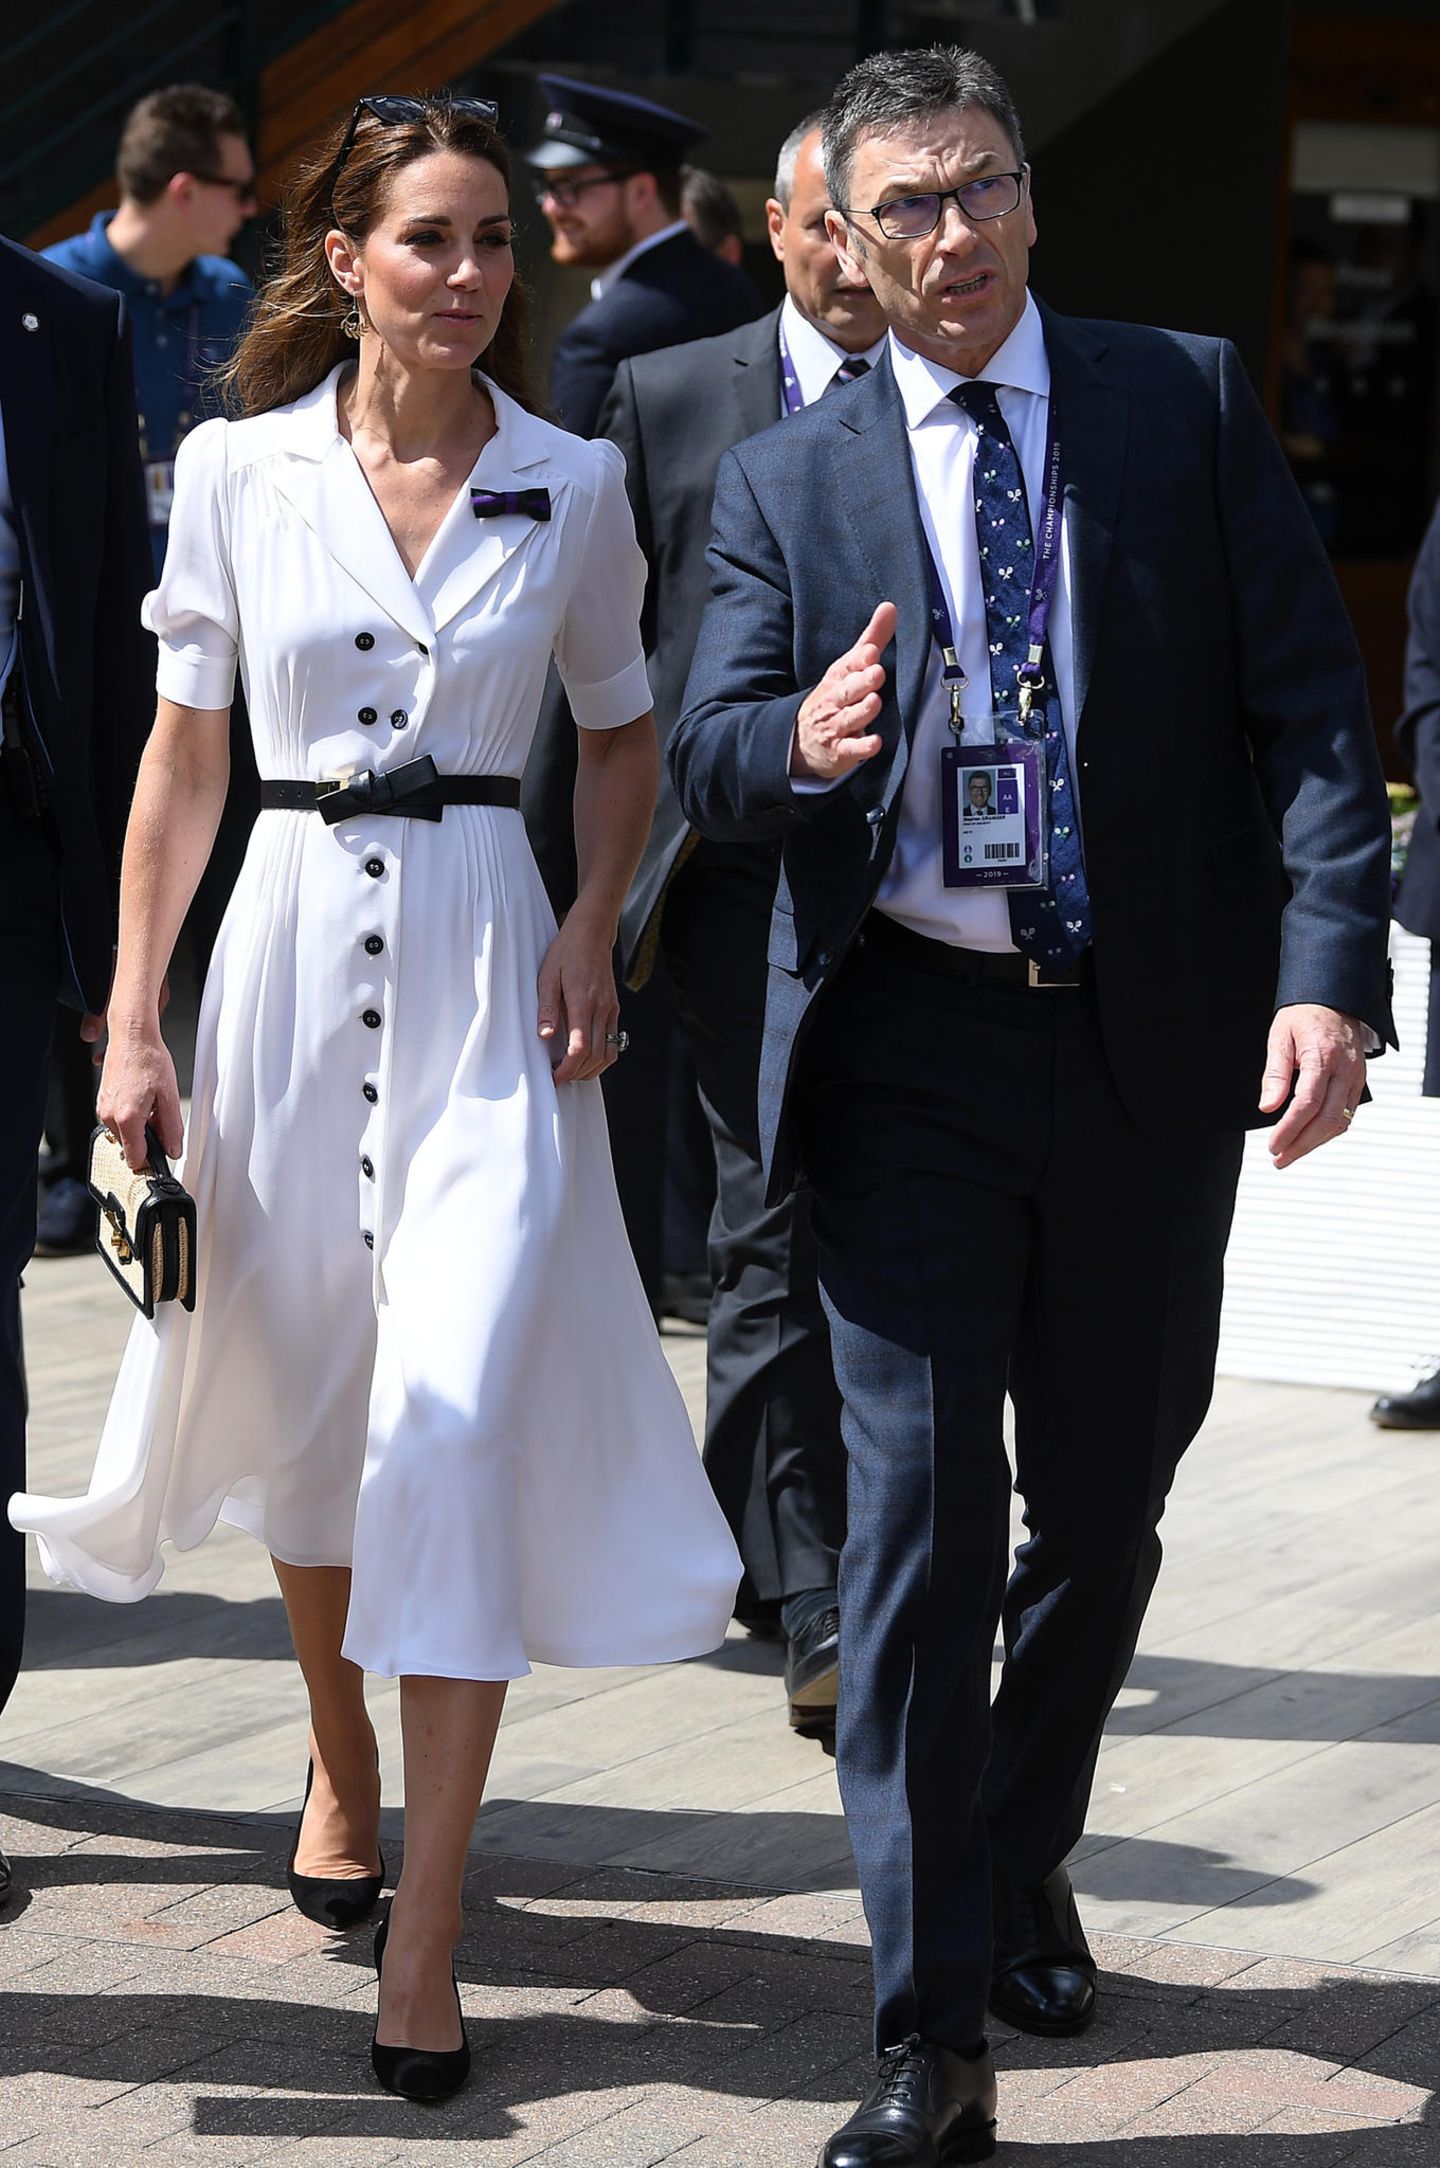 Meghan Markle + Herzogin Kate: Kate Middleton im weissen Kleid